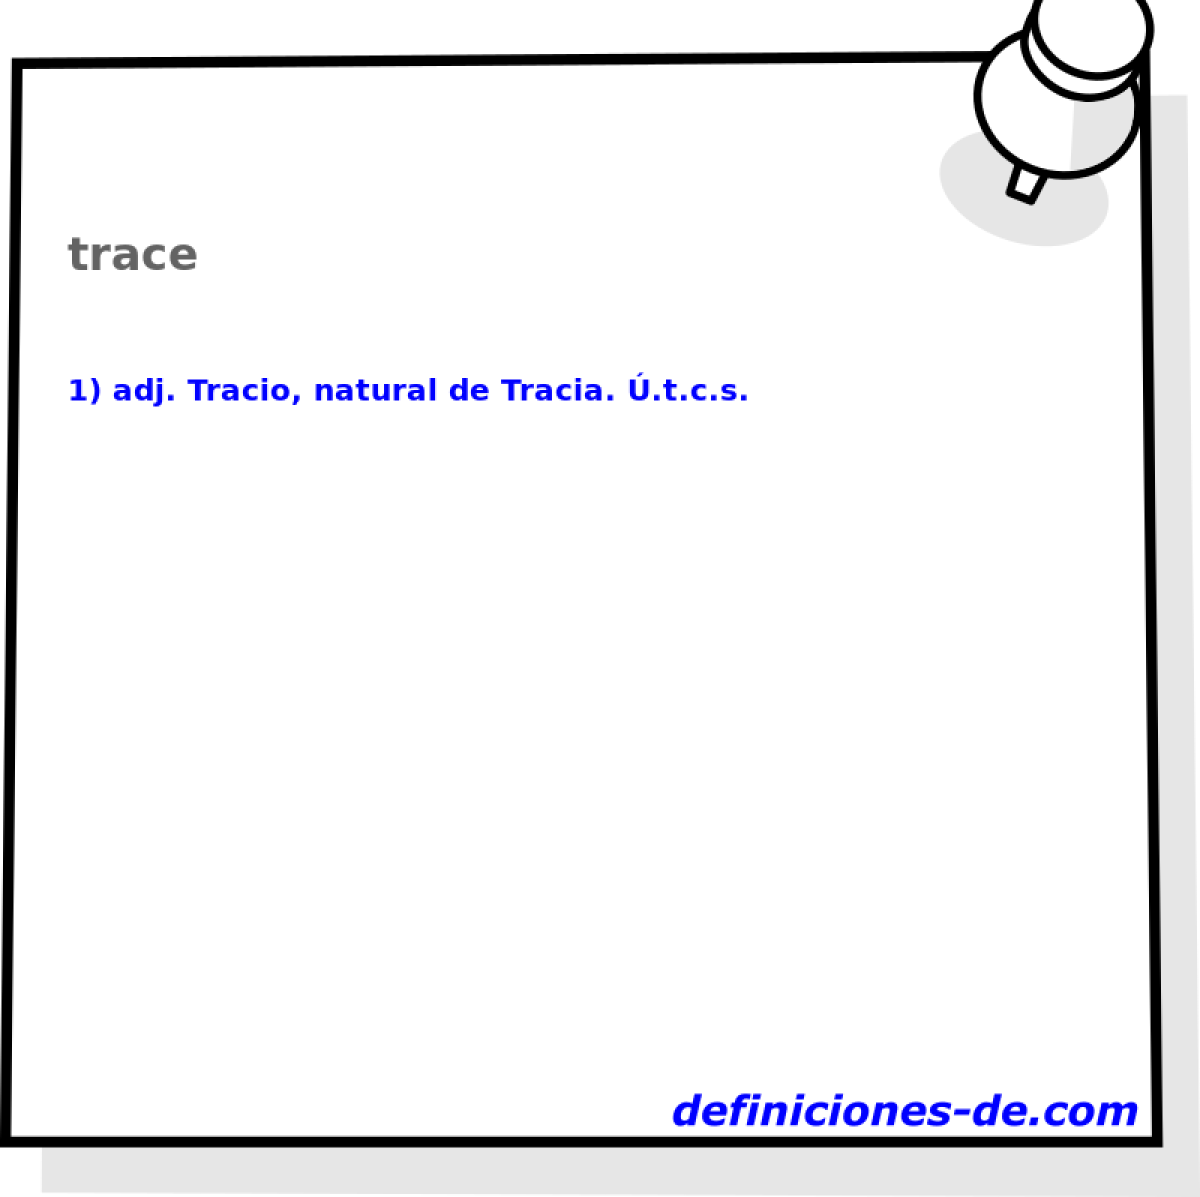 trace 